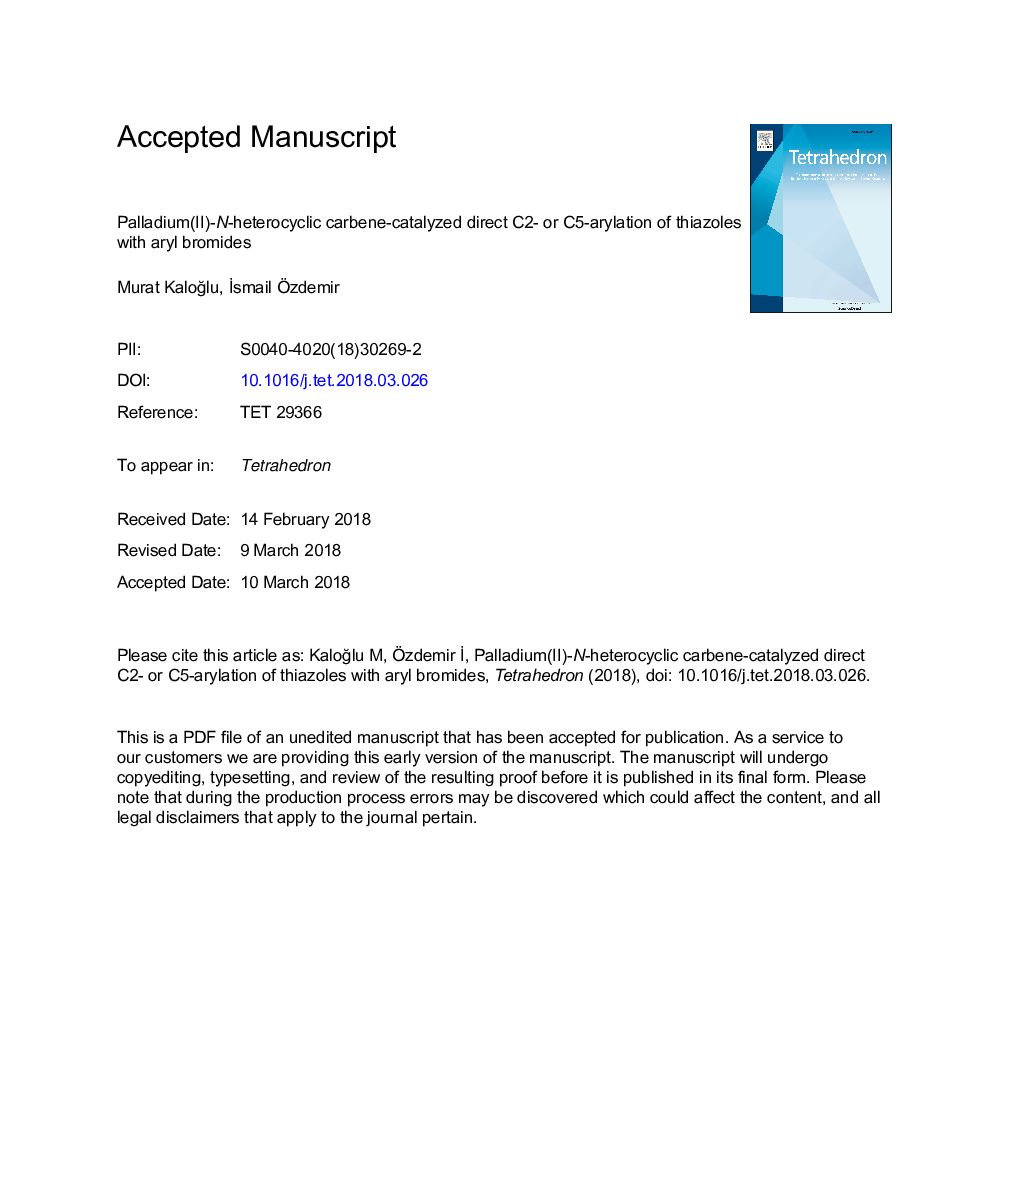 Palladium(II)-N-heterocyclic carbene-catalyzed direct C2- or C5-arylation of thiazoles with aryl bromides